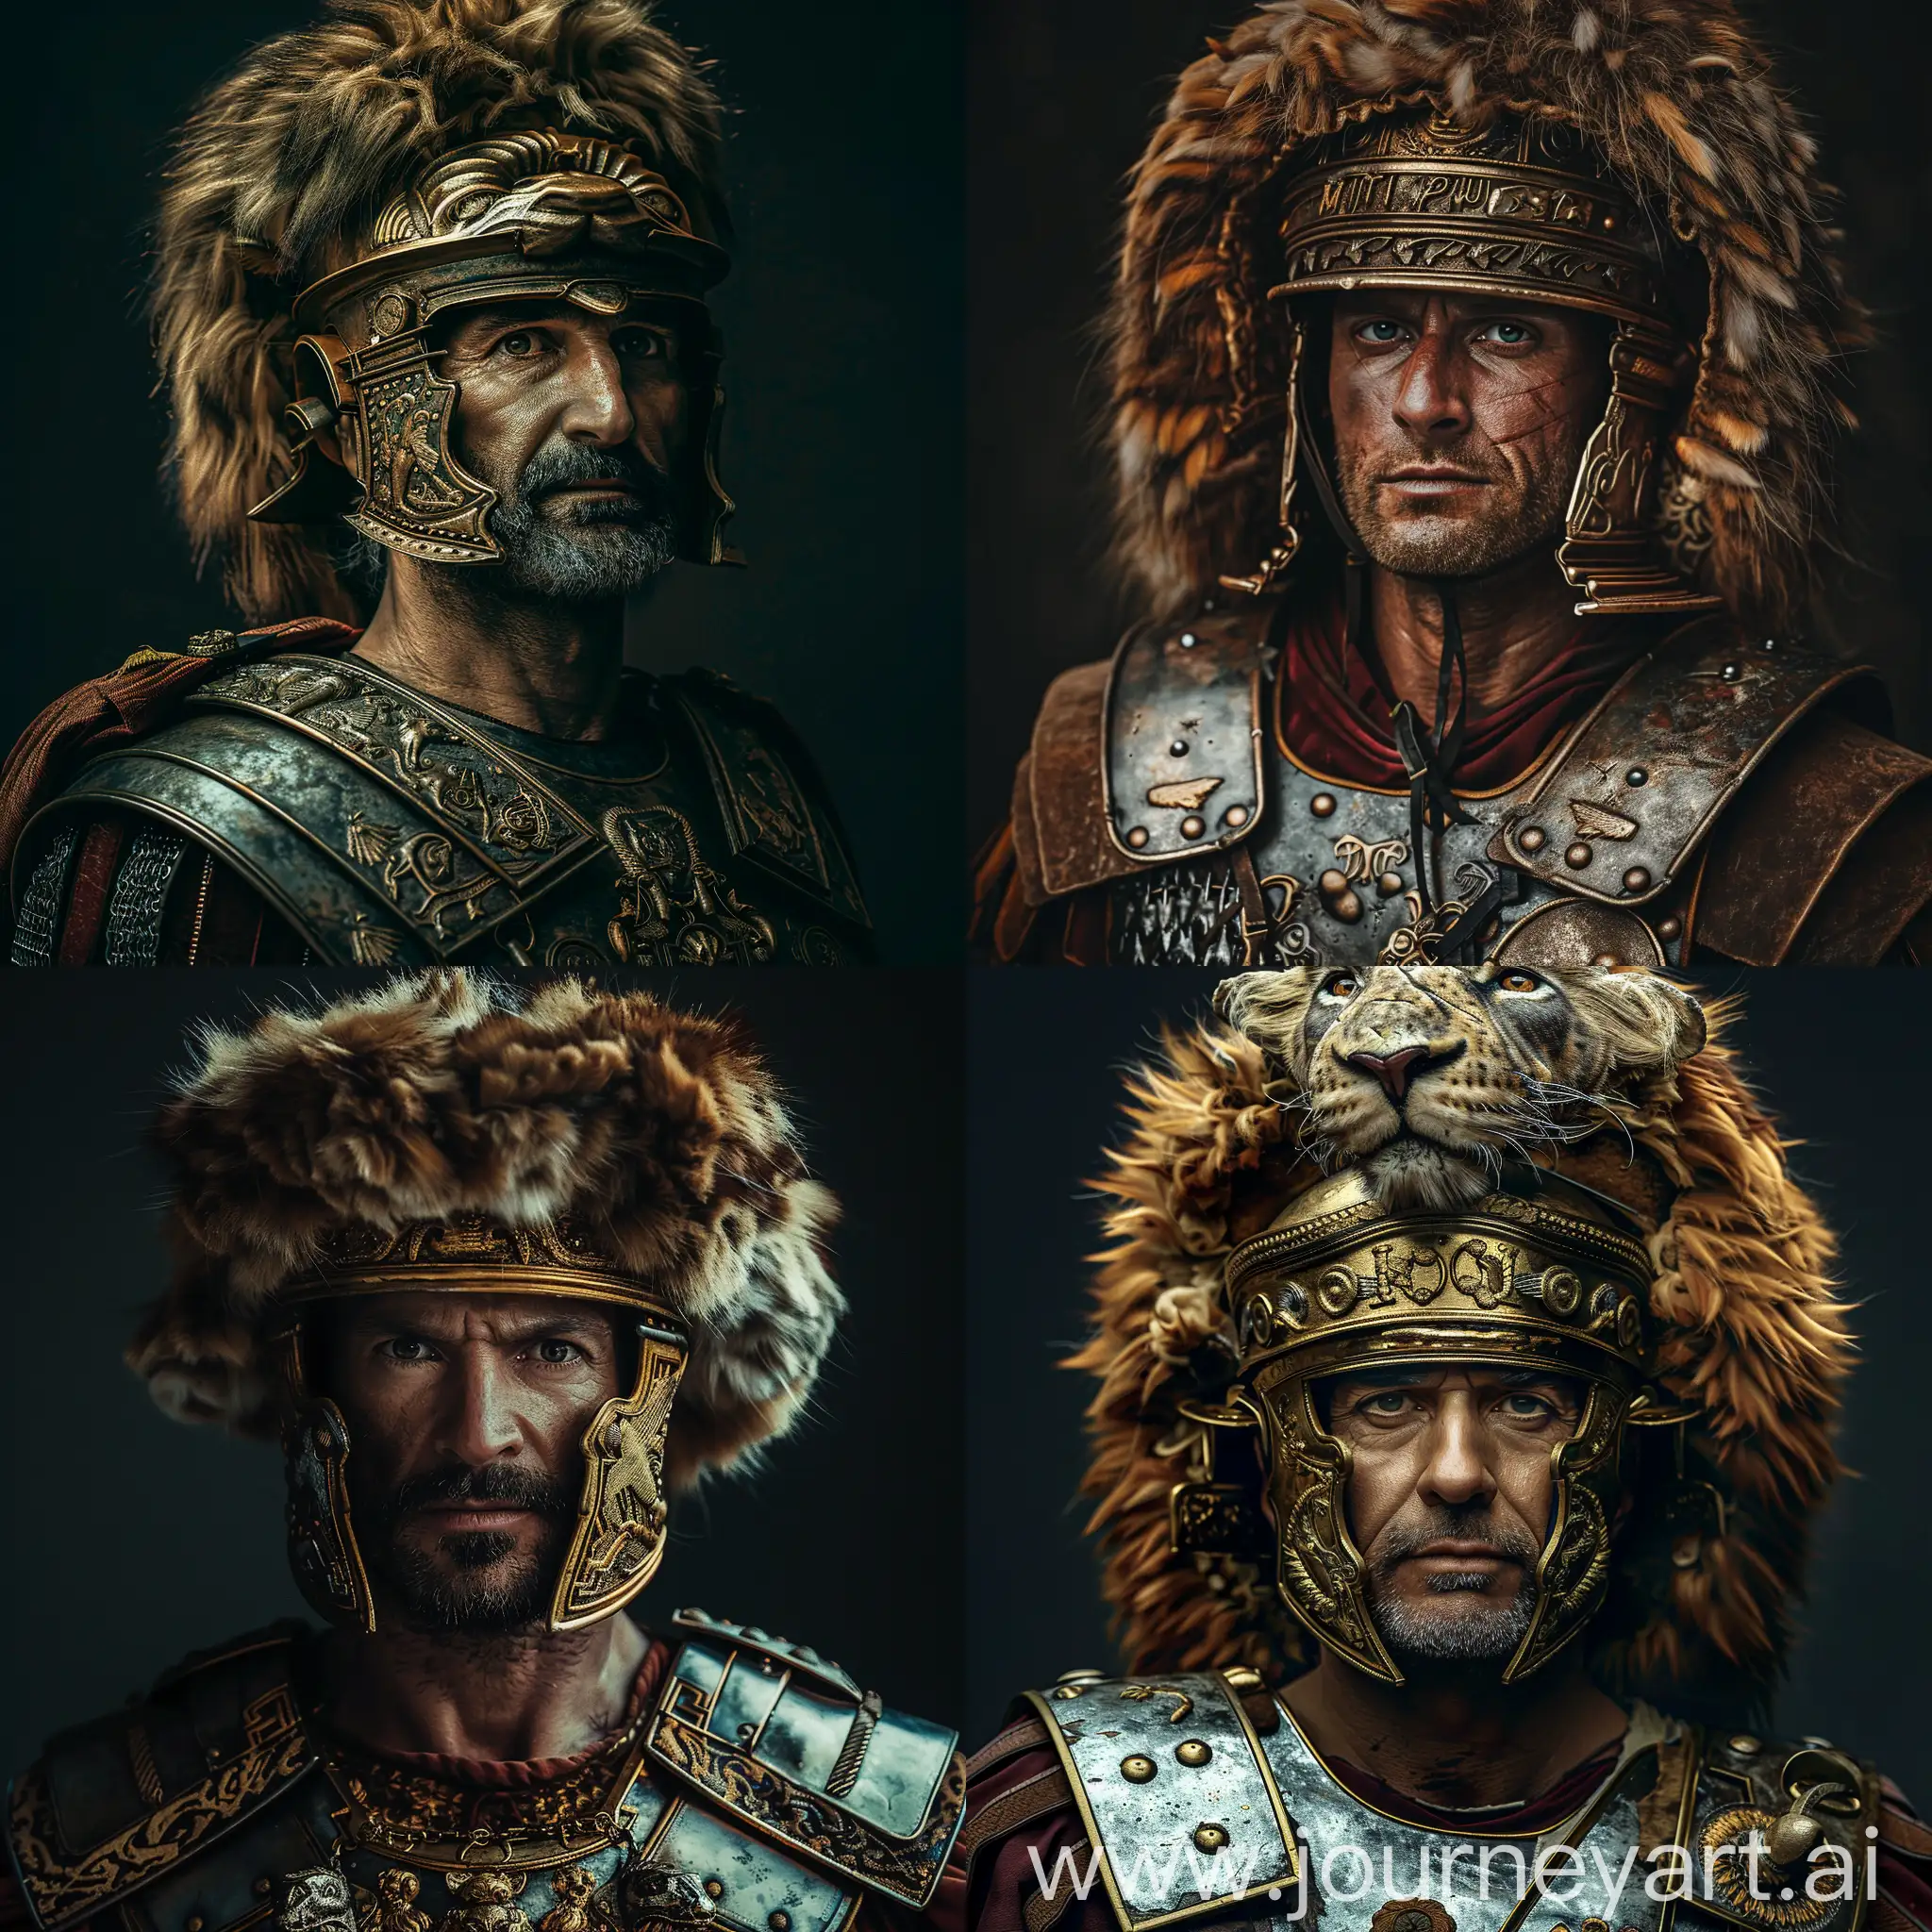 Portrait of Mithridates Eupator, Roman armor, intricate details, lion pelt headgear over helmet, stoic expression, regal, historical, cinematic lighting